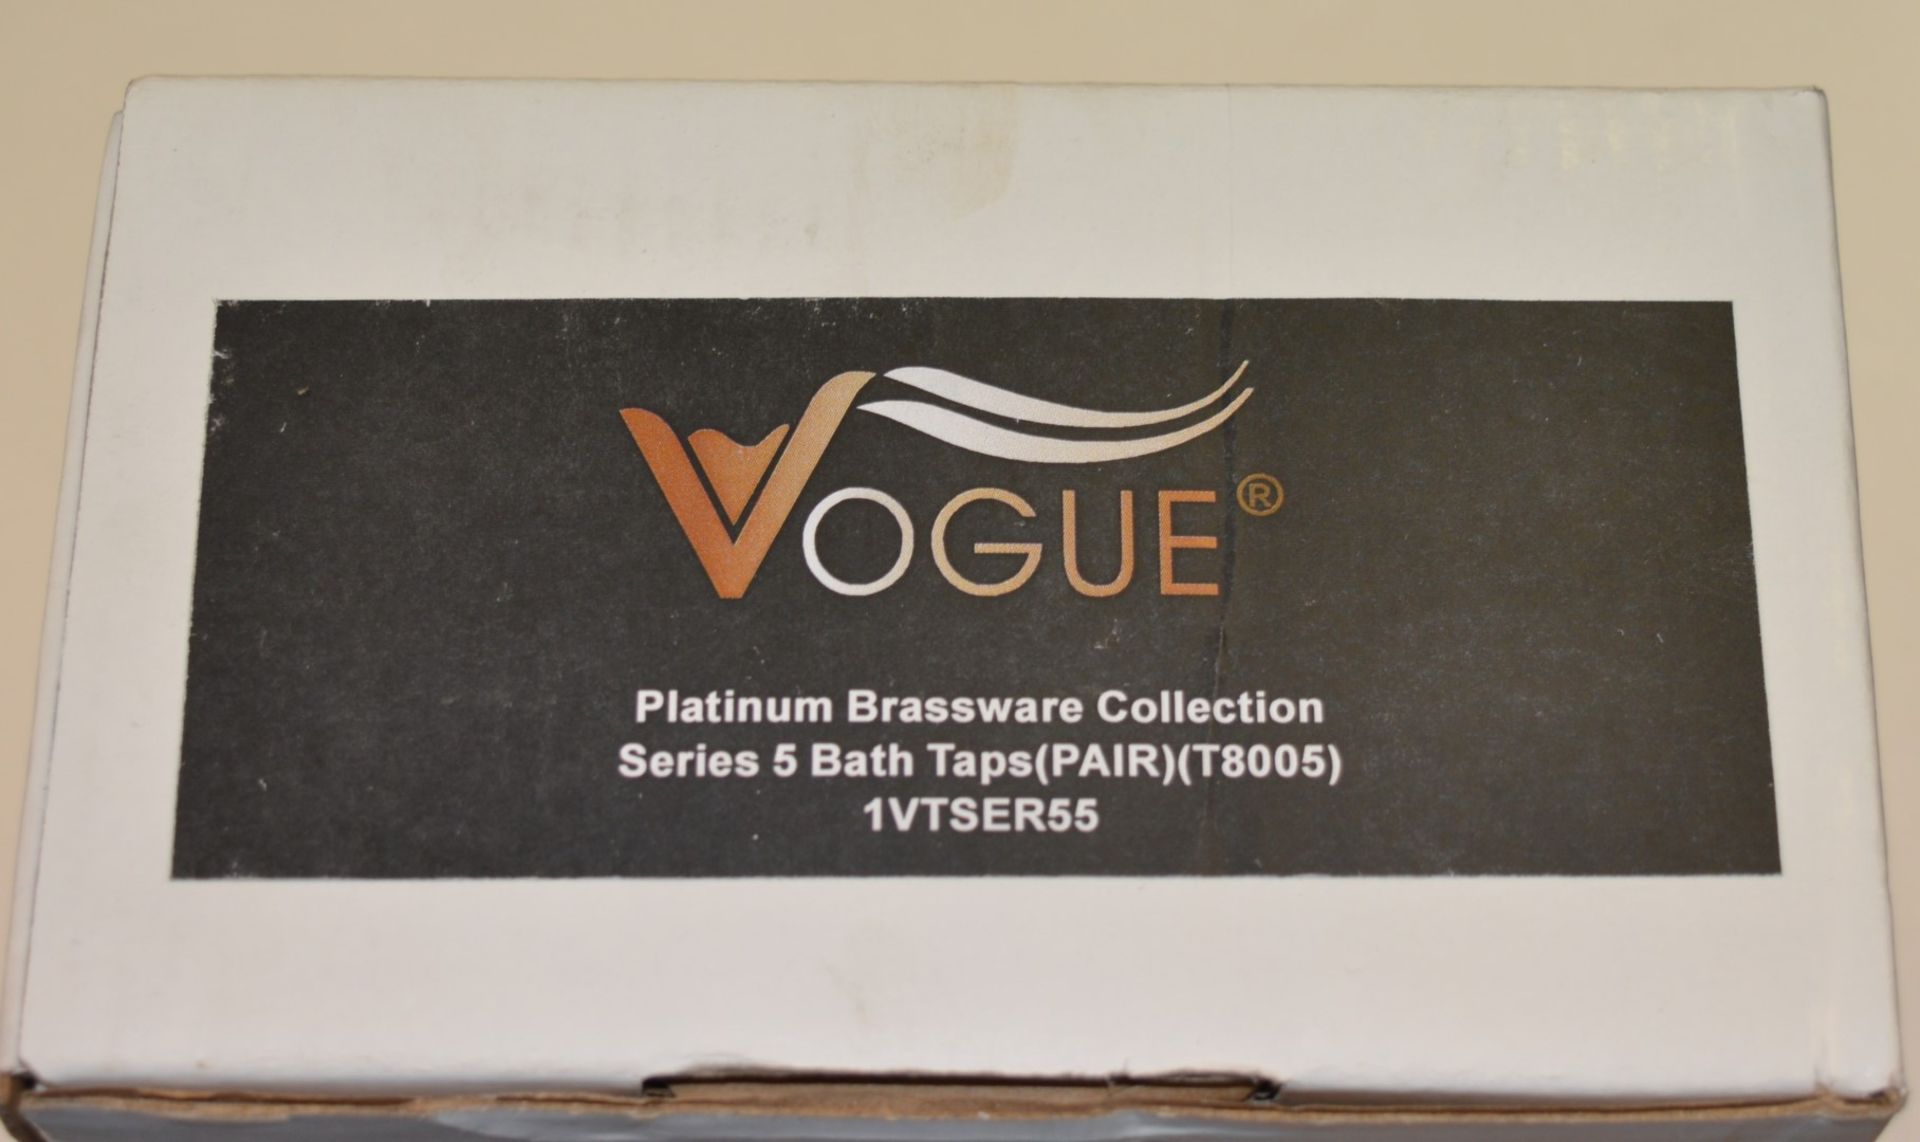 1 x Series 5 BATH TAPS - Vogue Bathrooms Platinum Brassware Collection - Pair of - Contemporary - Image 2 of 6